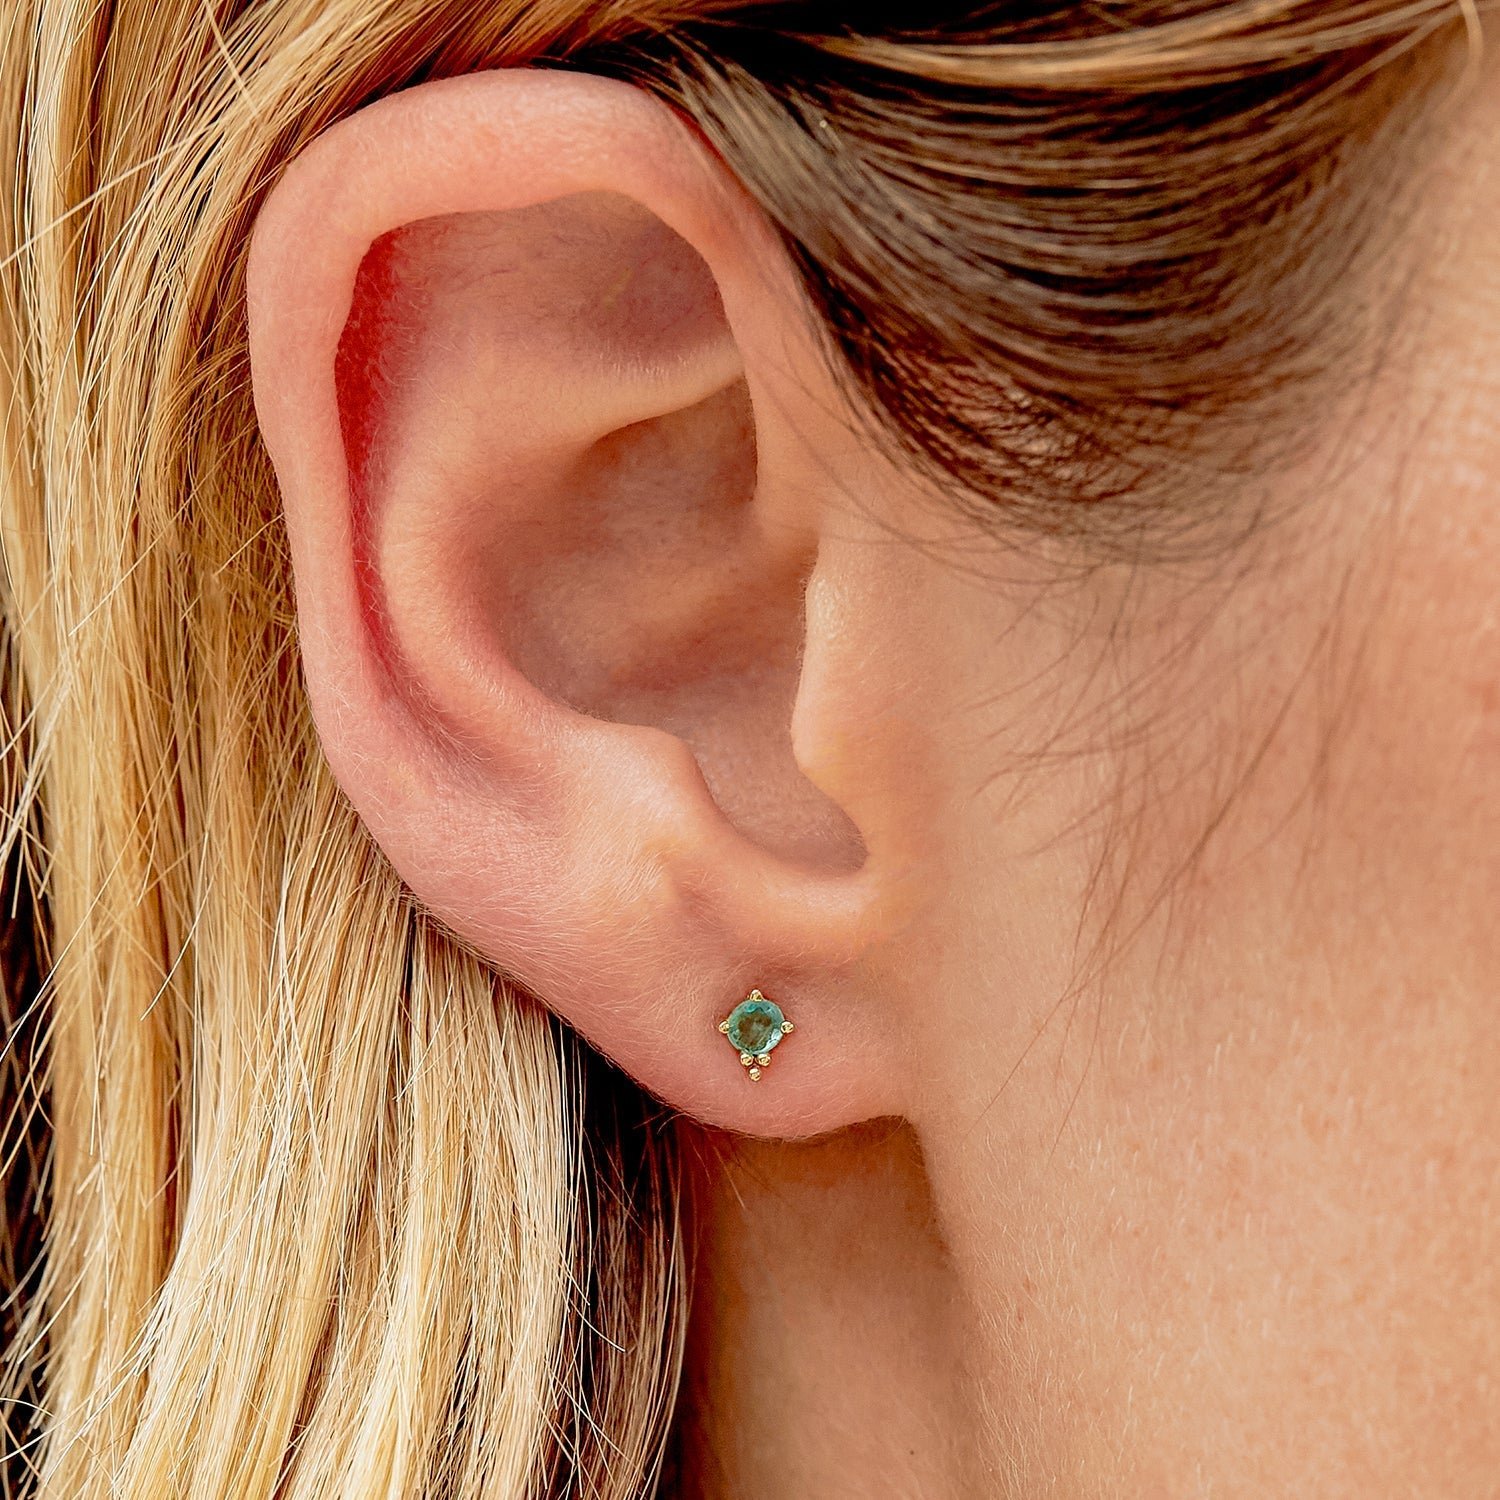 14k Gold | gorjana jewelry | Emerald Trinity Studs | Emerald earrings | May birthstone